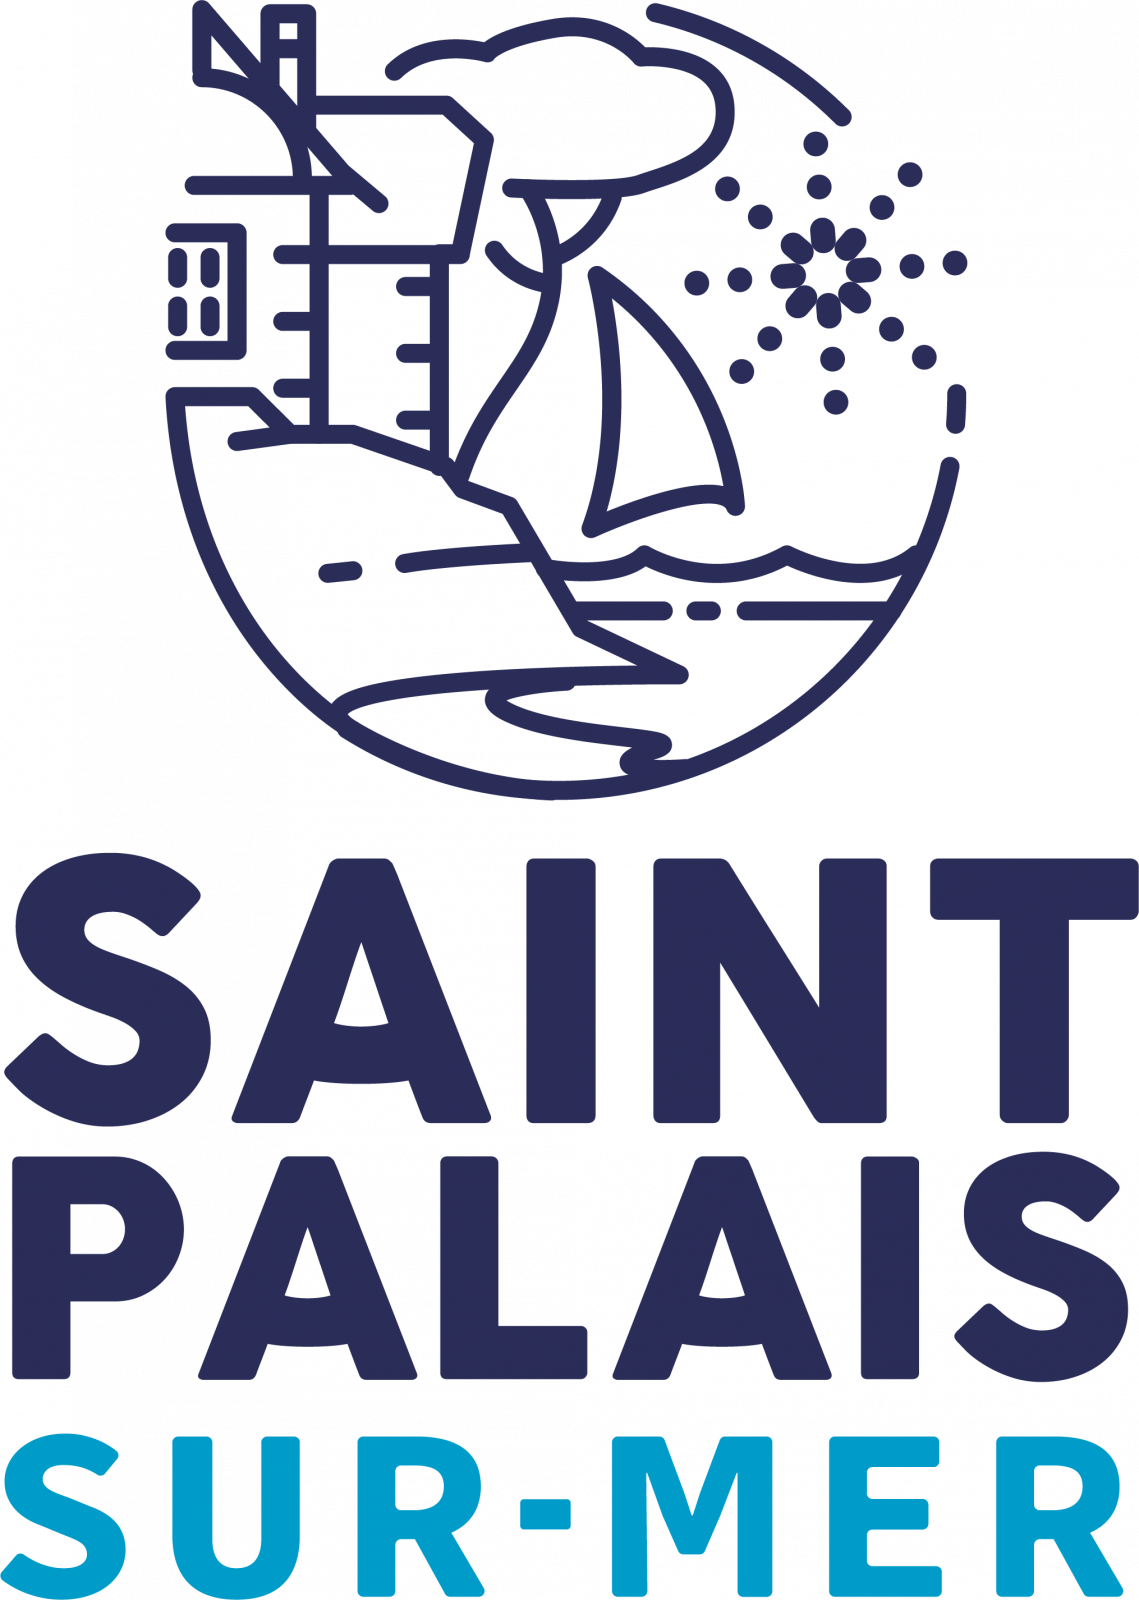 Image logo Saint palais sur mer